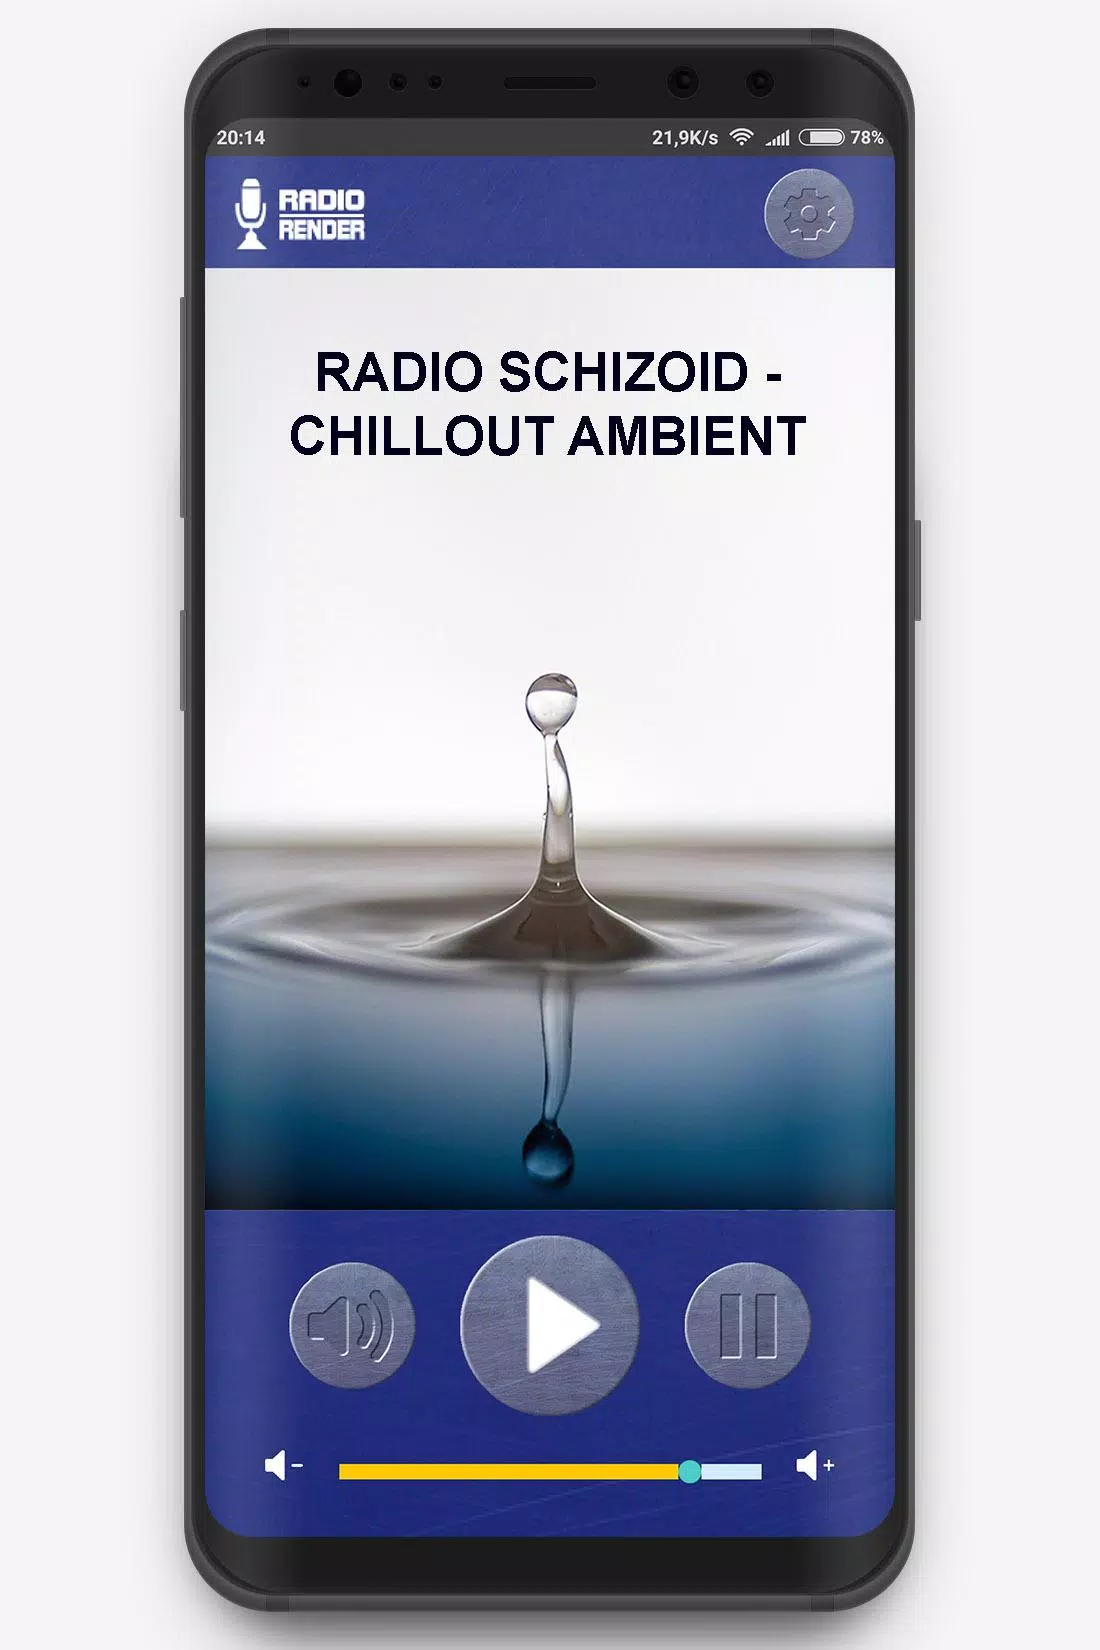 Скачать Radio Schizoid - Chillout Ambient Живое радио APK для Android